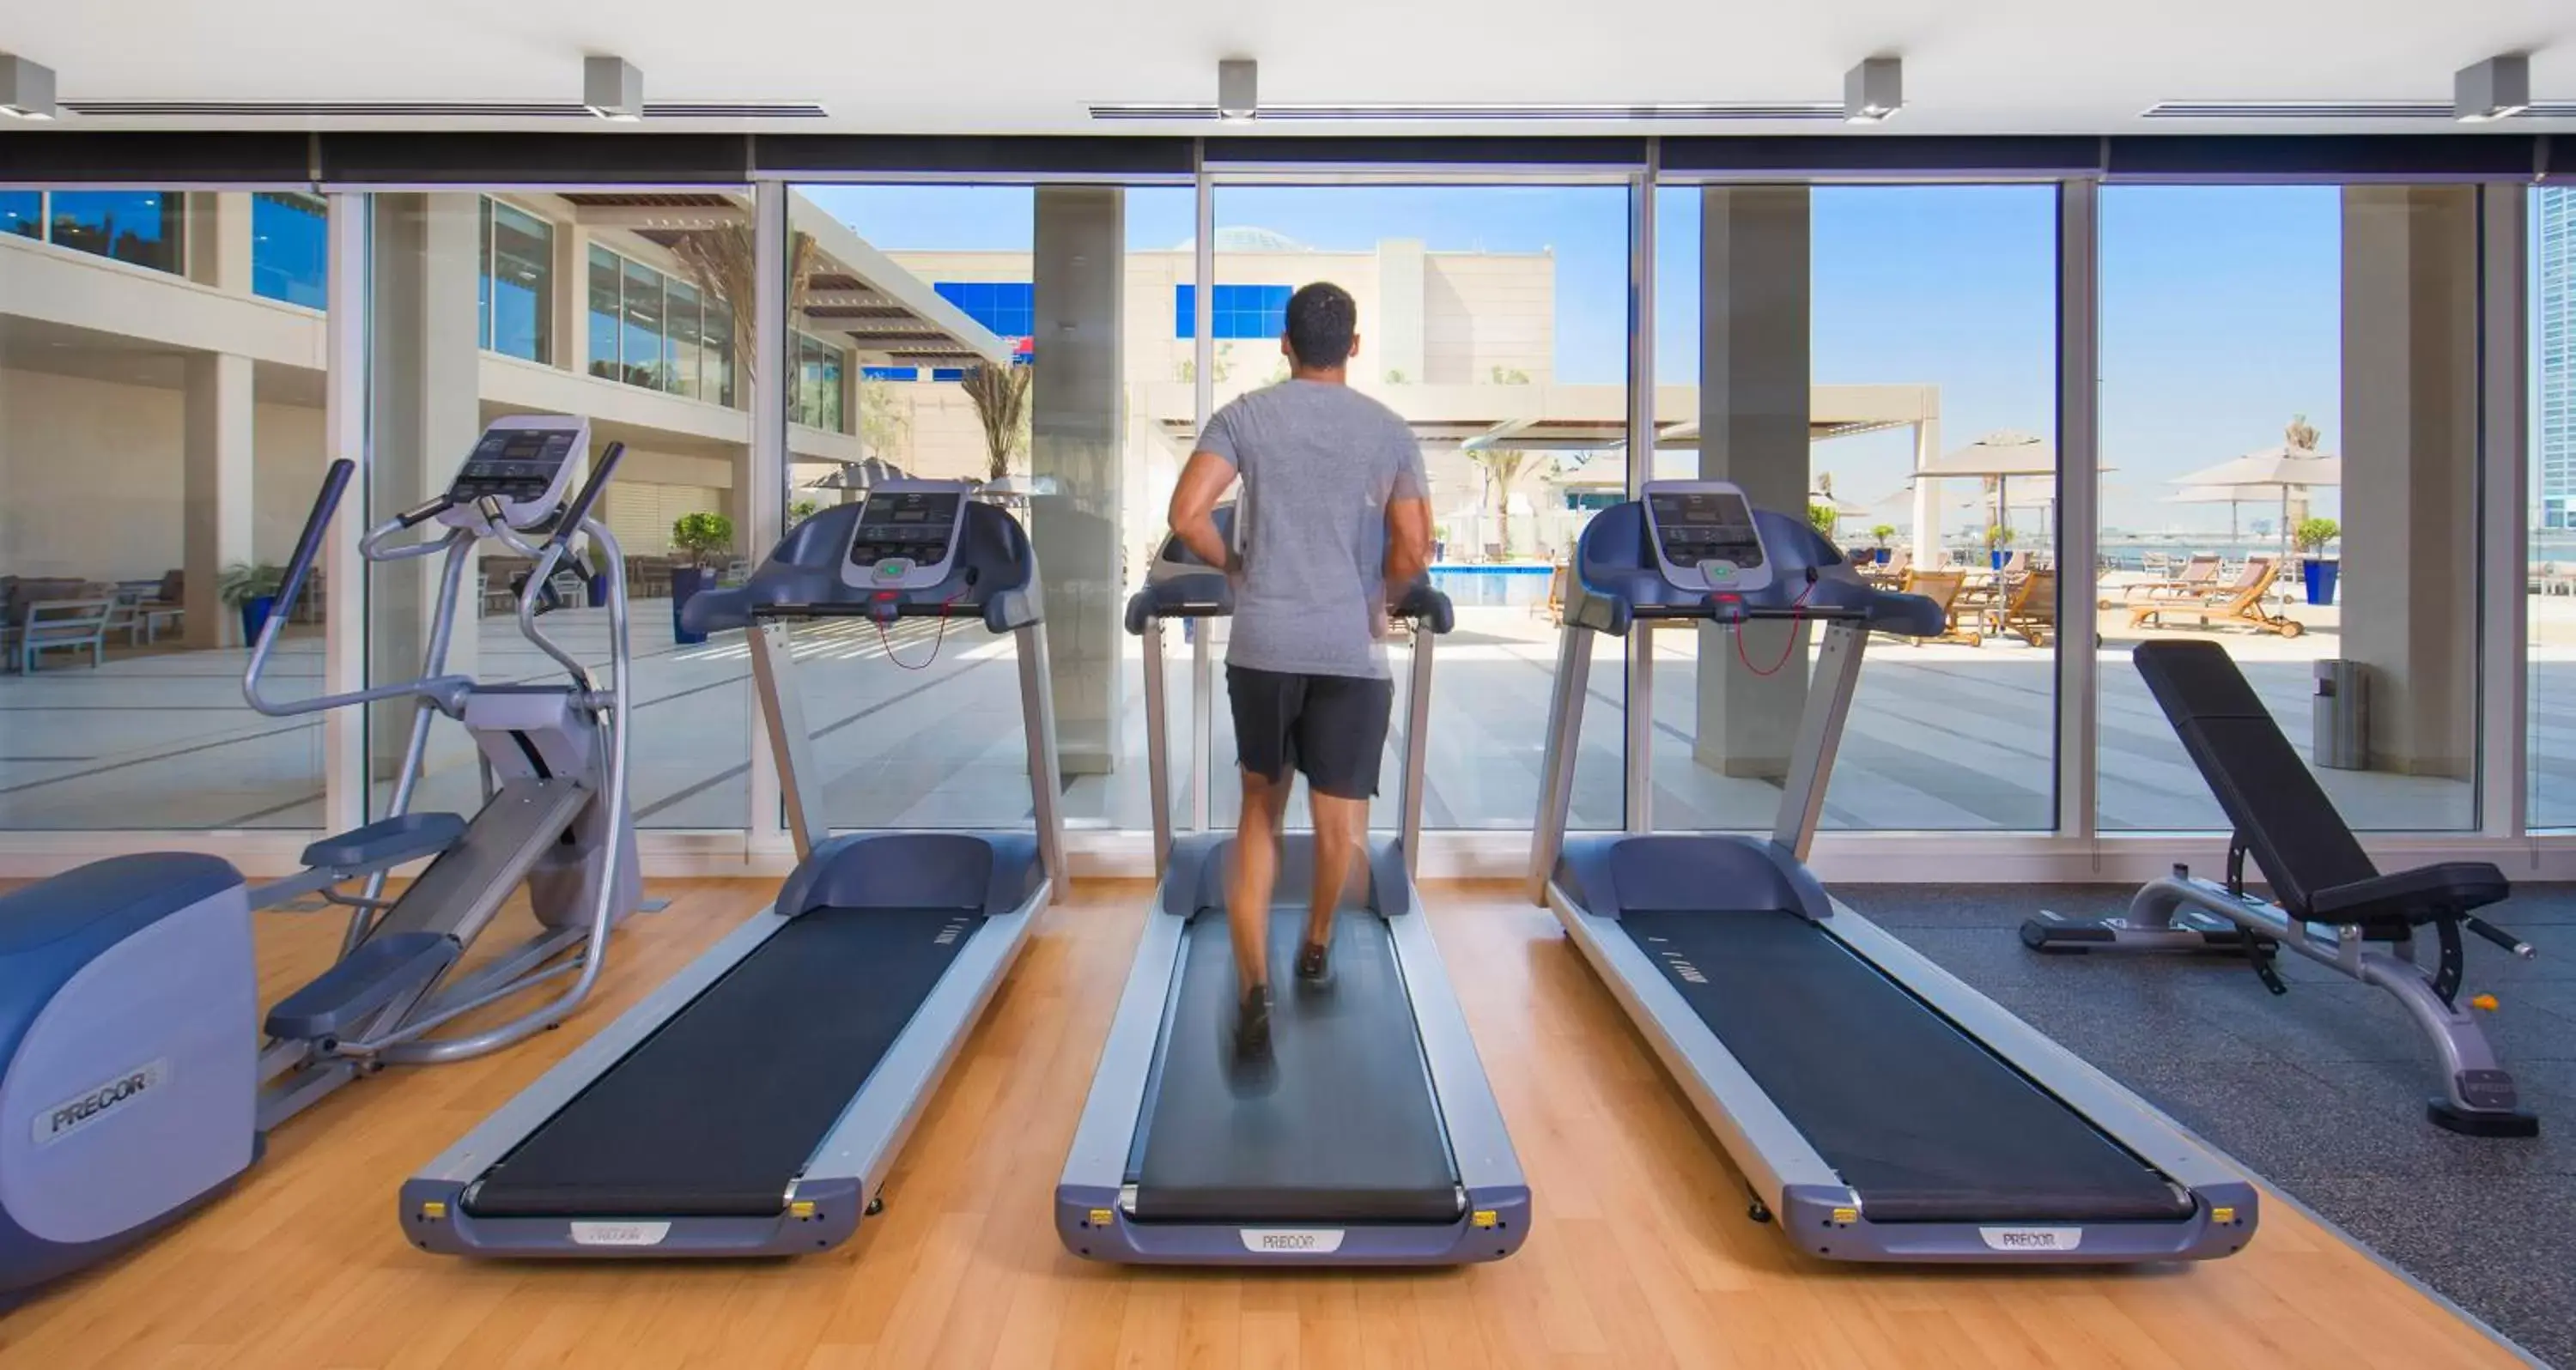 Fitness centre/facilities, Fitness Center/Facilities in Hilton Garden Inn Ras Al Khaimah